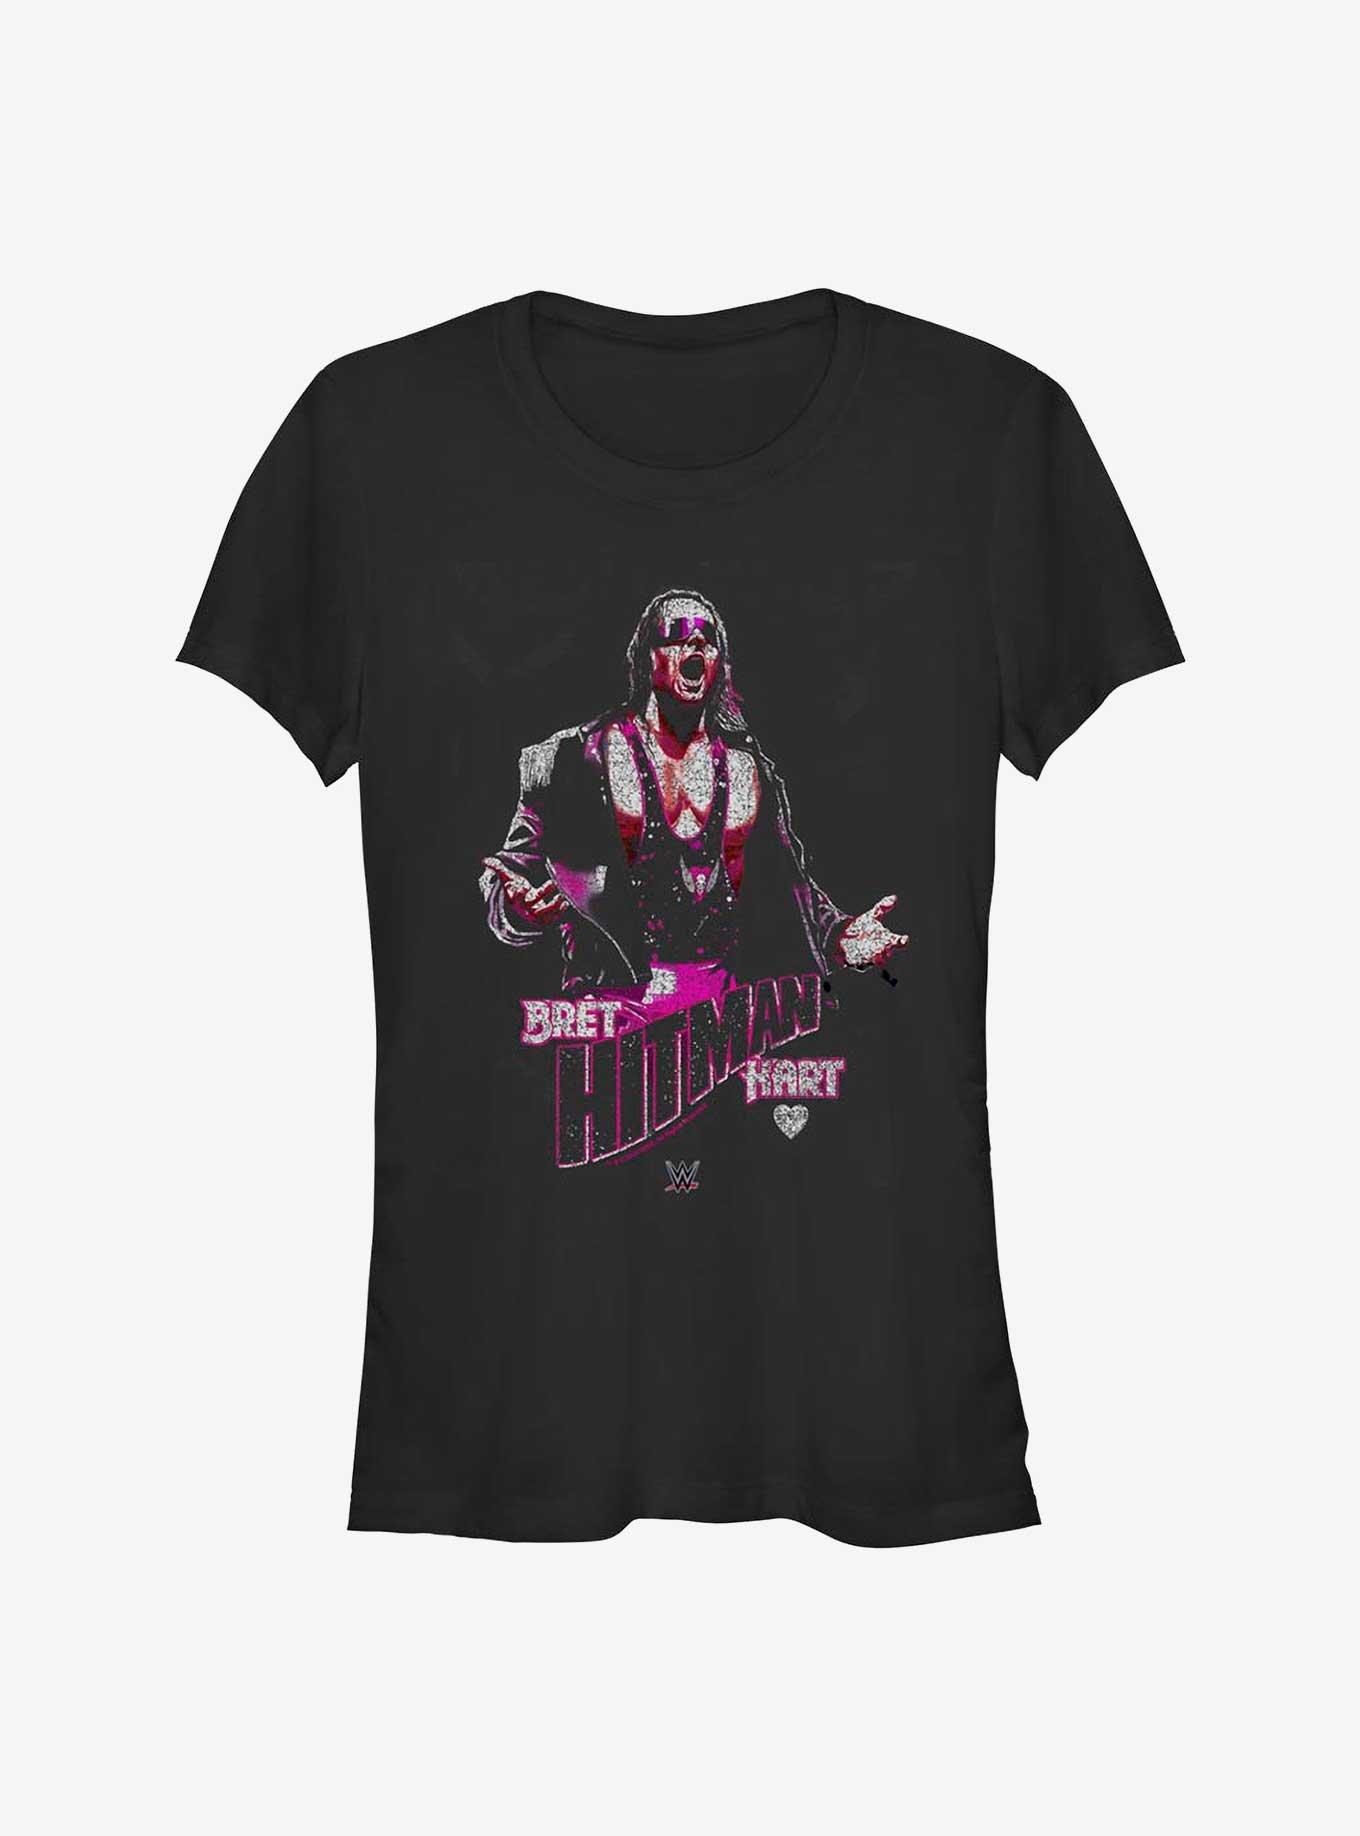 WWE Bret "Hitman" Hart Poster Girls T-Shirt